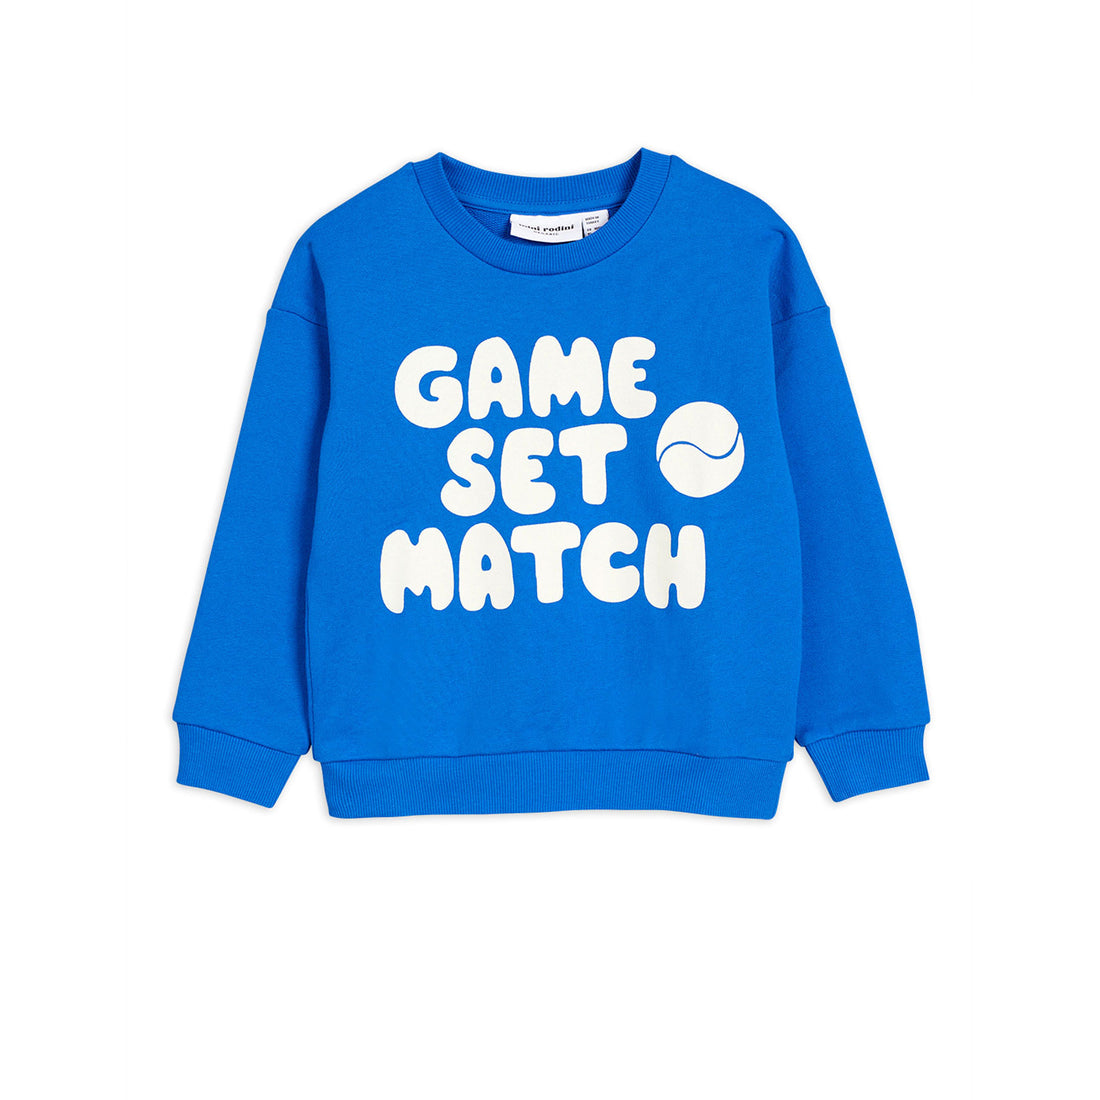 Mini Rodini Blue Game Quote Sweatshirt